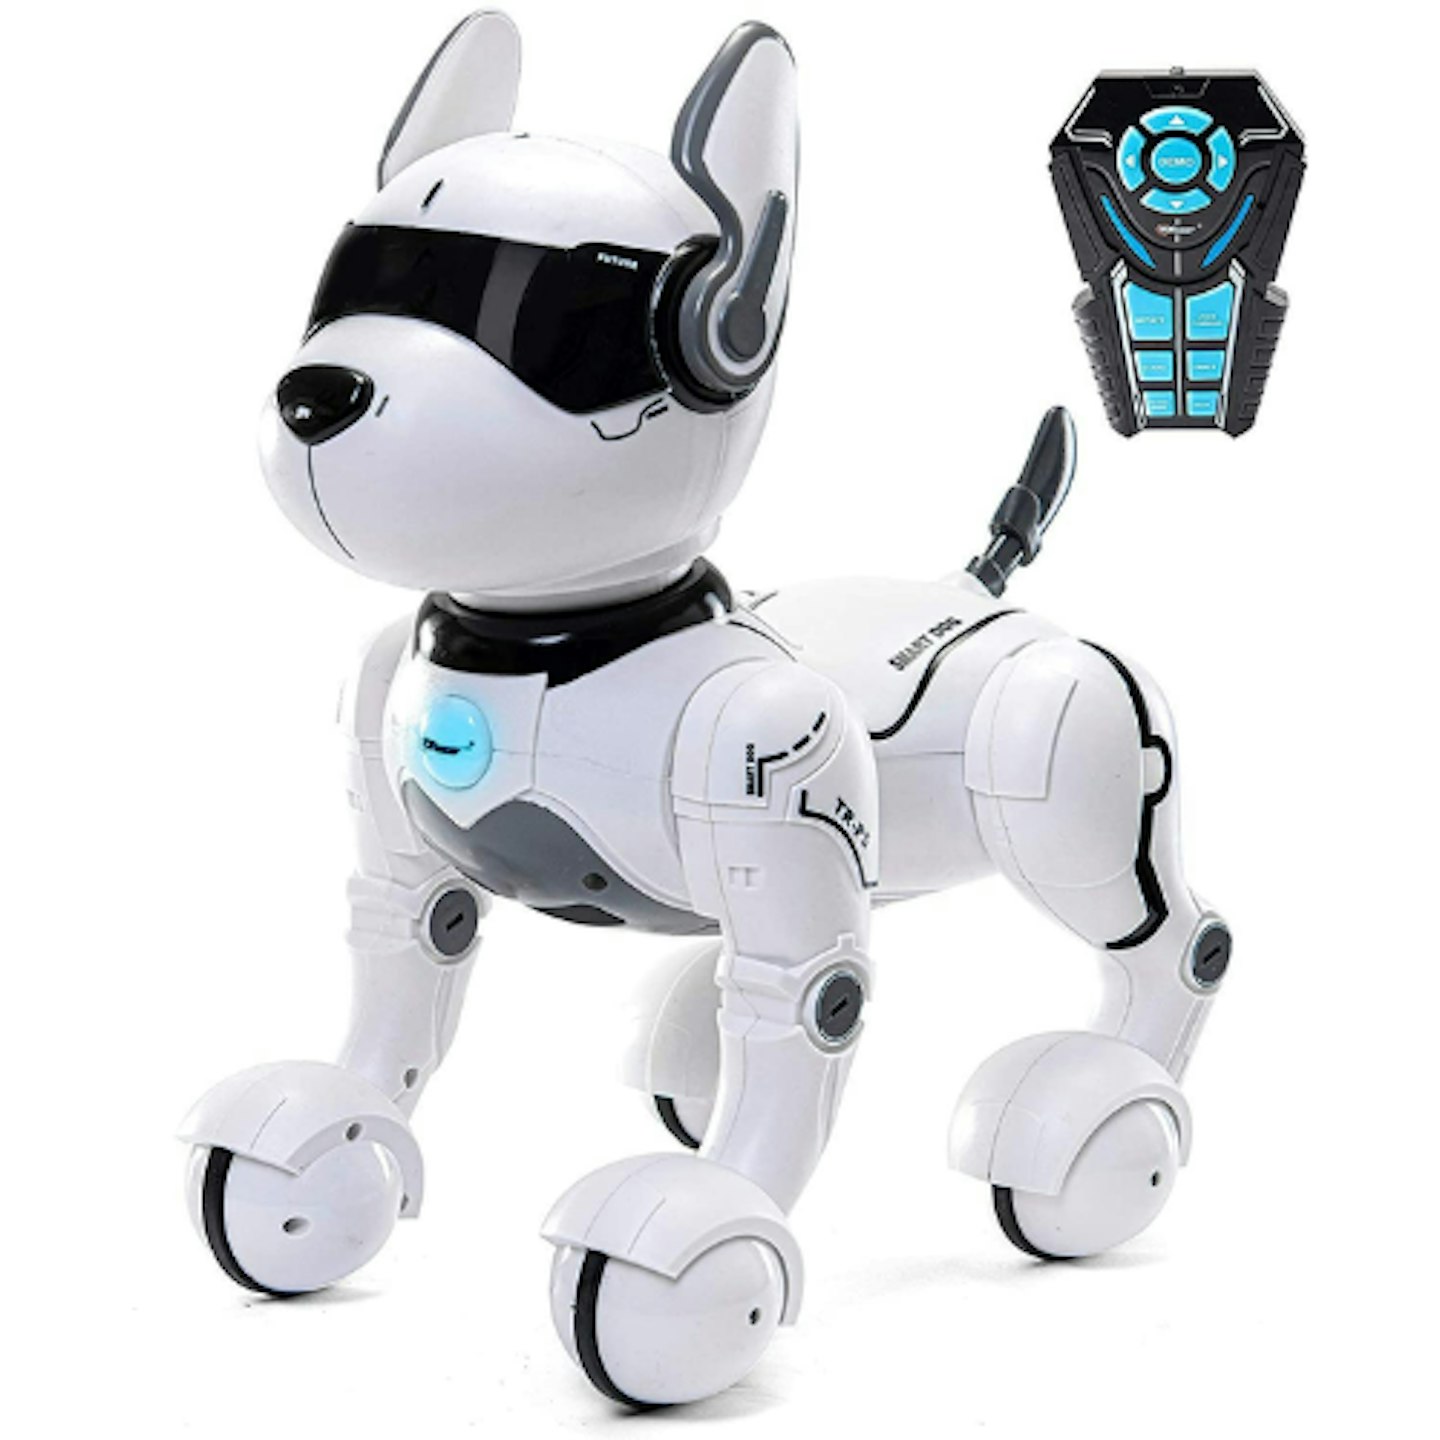 https://images.bauerhosting.com/affiliates/sites/12/motherandbaby/2022/03/Top-Race-Remote-Control-Robot-Dog.png?auto=format&w=1440&q=80